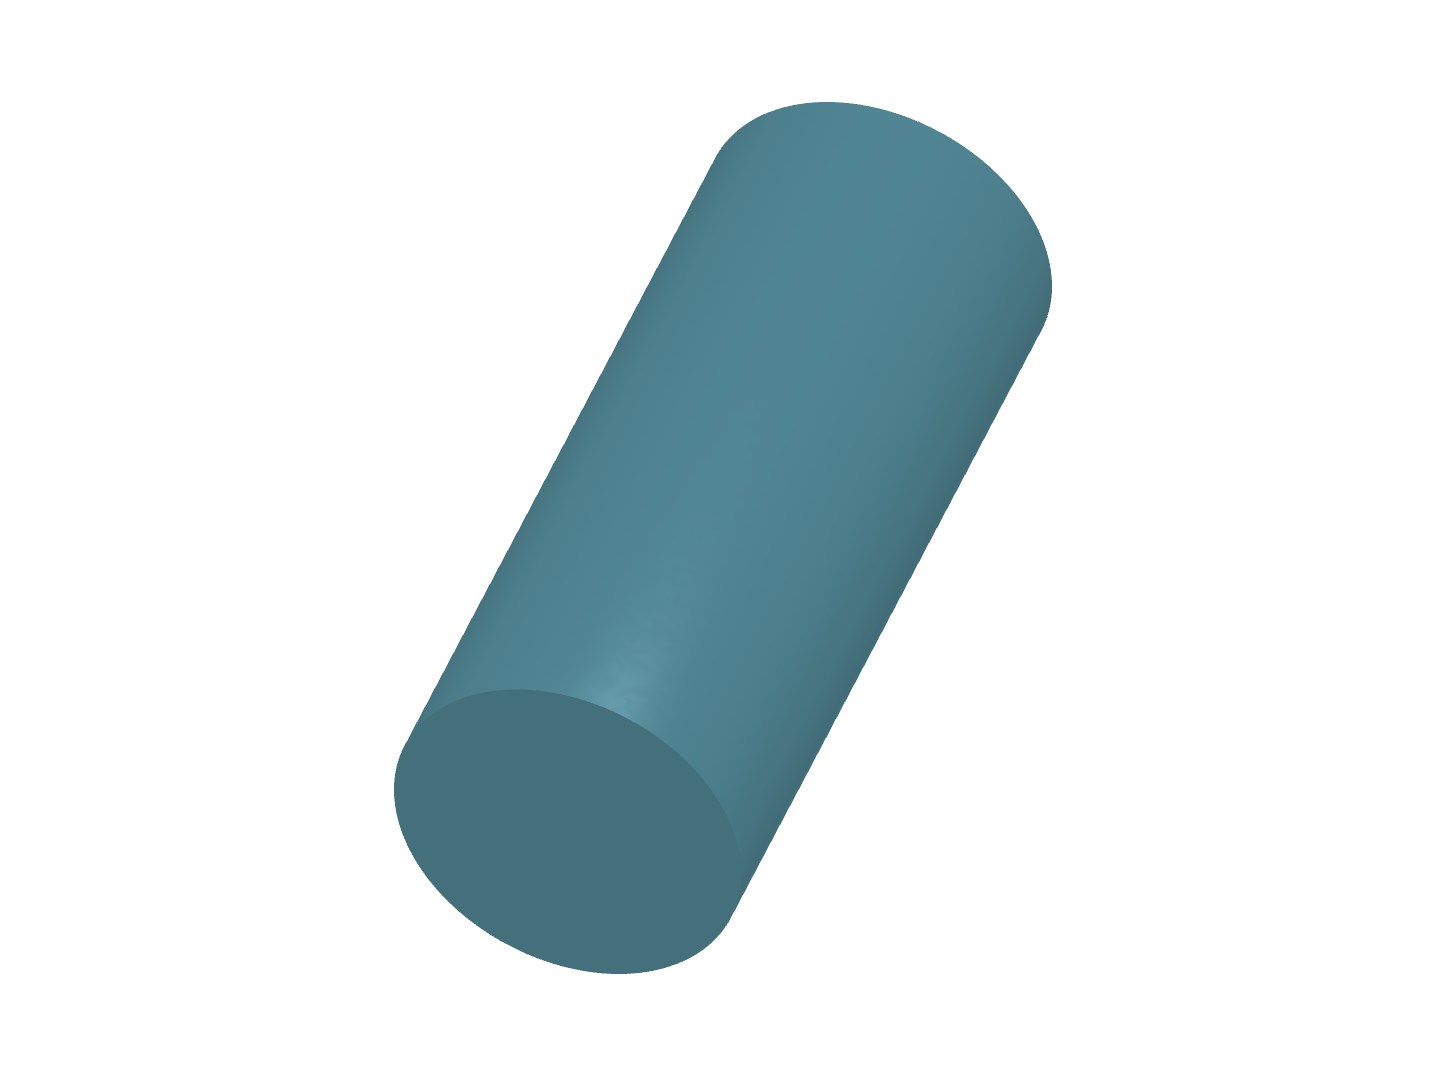 poutre cylindrique axe selon z image